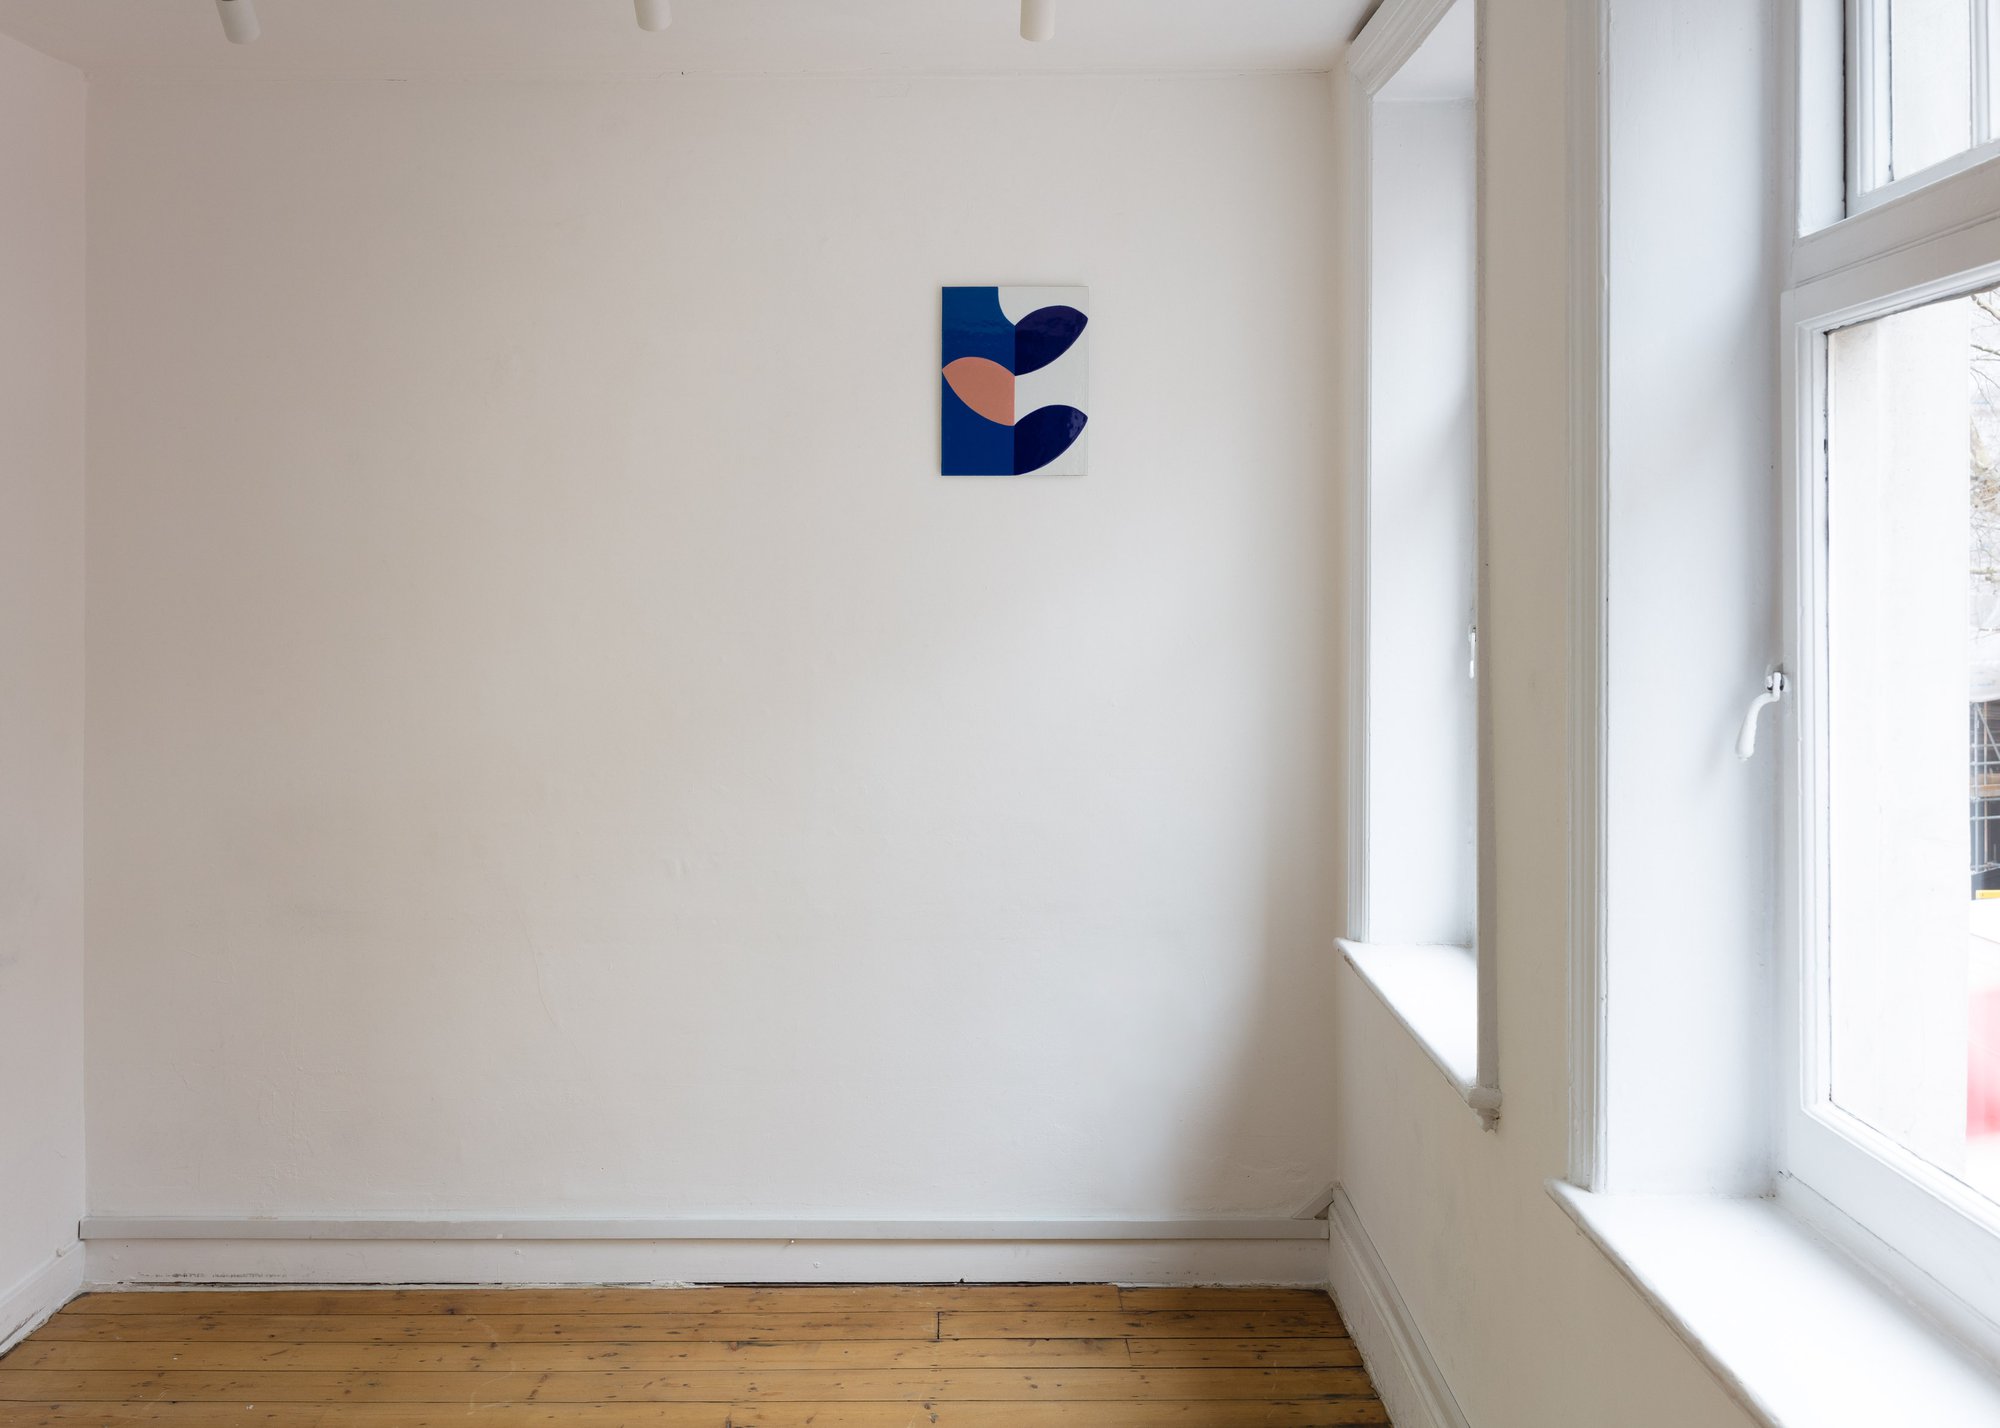 Installation view, Ulrike Müller, The Walls Do Not Fall, Rodeo, London, 2019